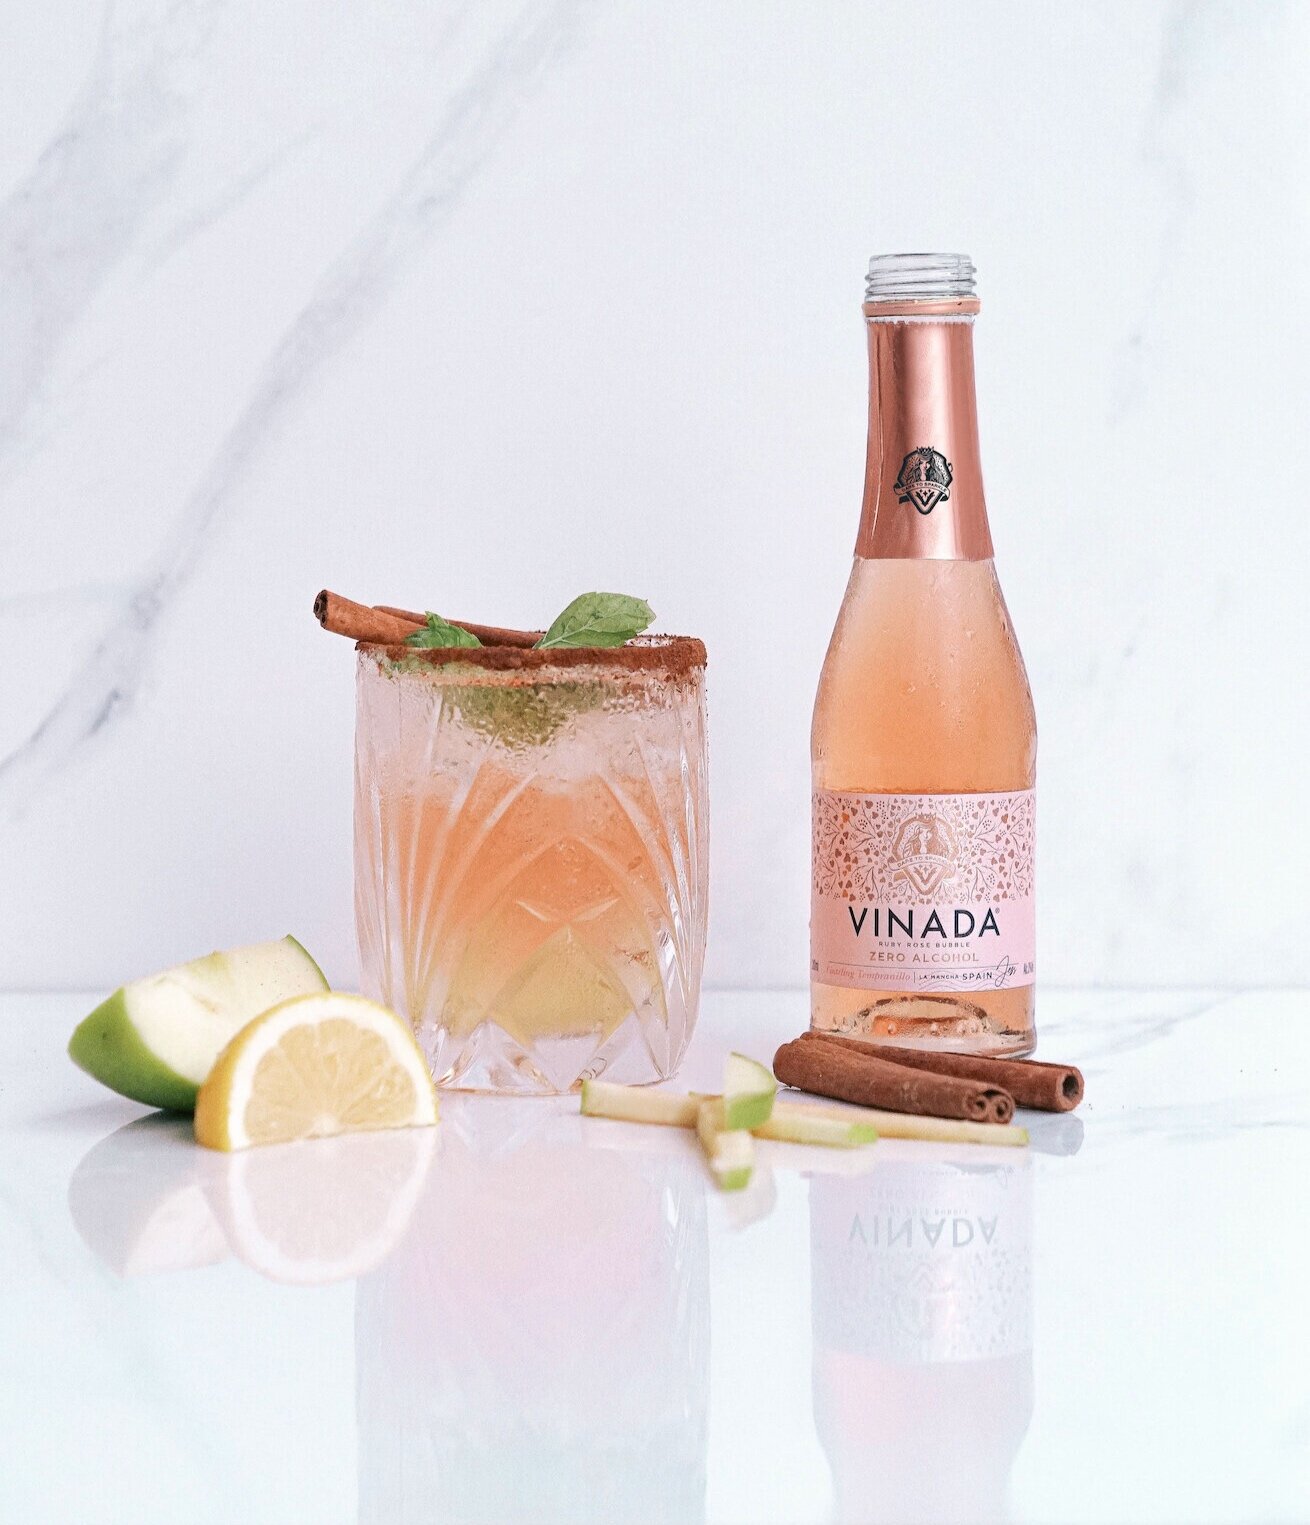 — VINADA® (0%) VEGAN Rosé Tinteling Tempranillo